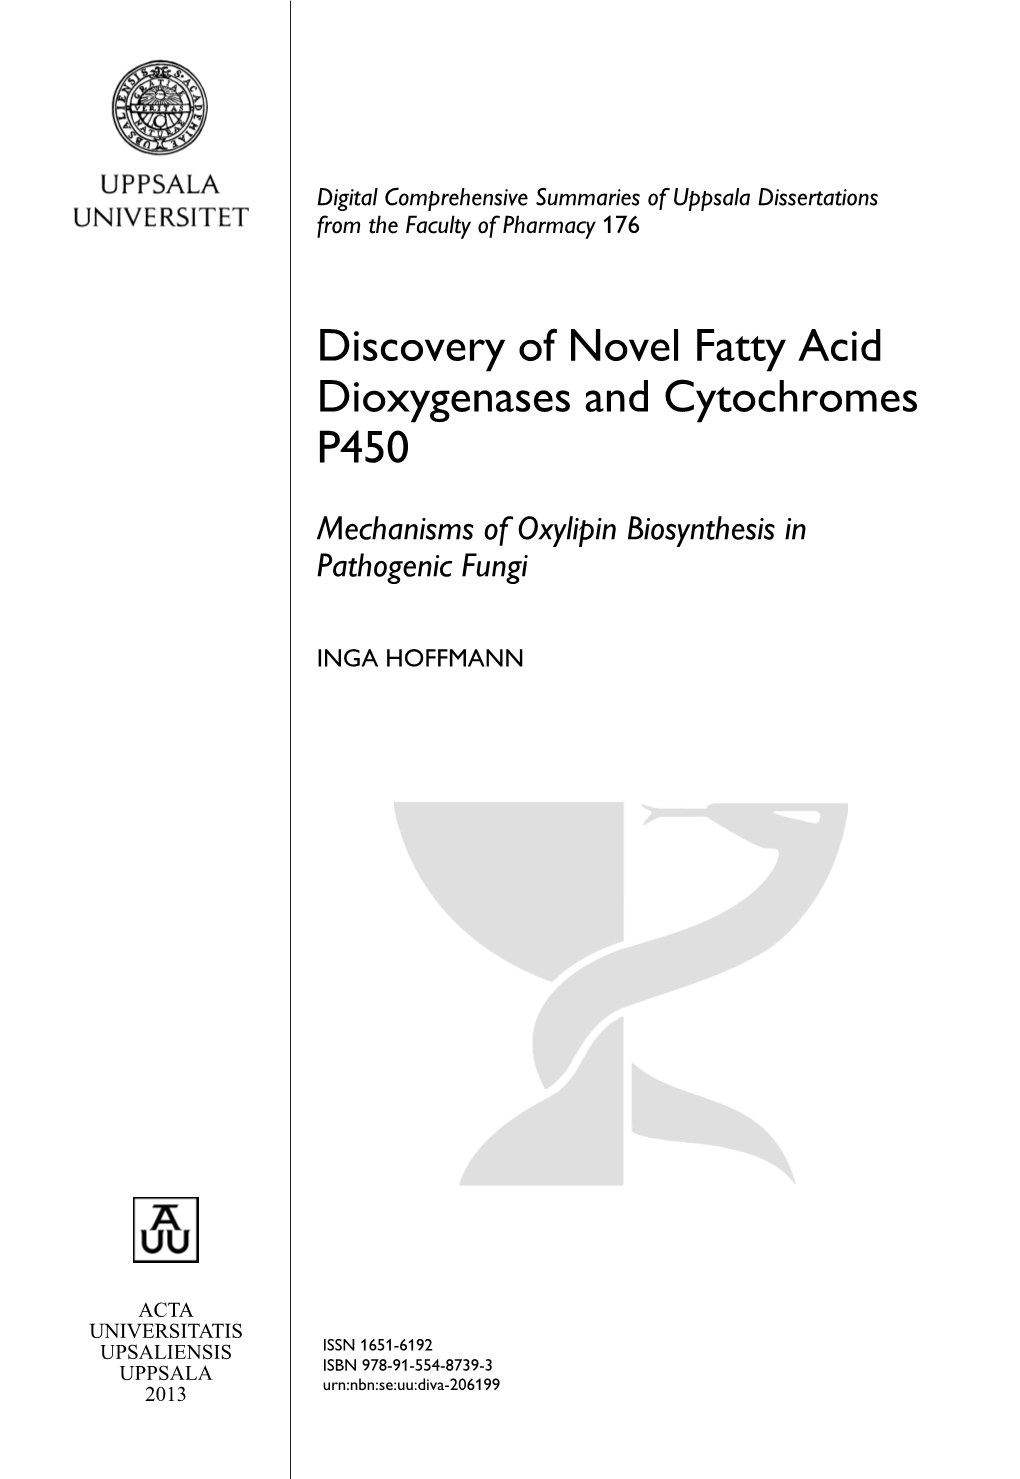 Discovery of Novel Fatty Acid Dioxygenases and Cytochromes P450